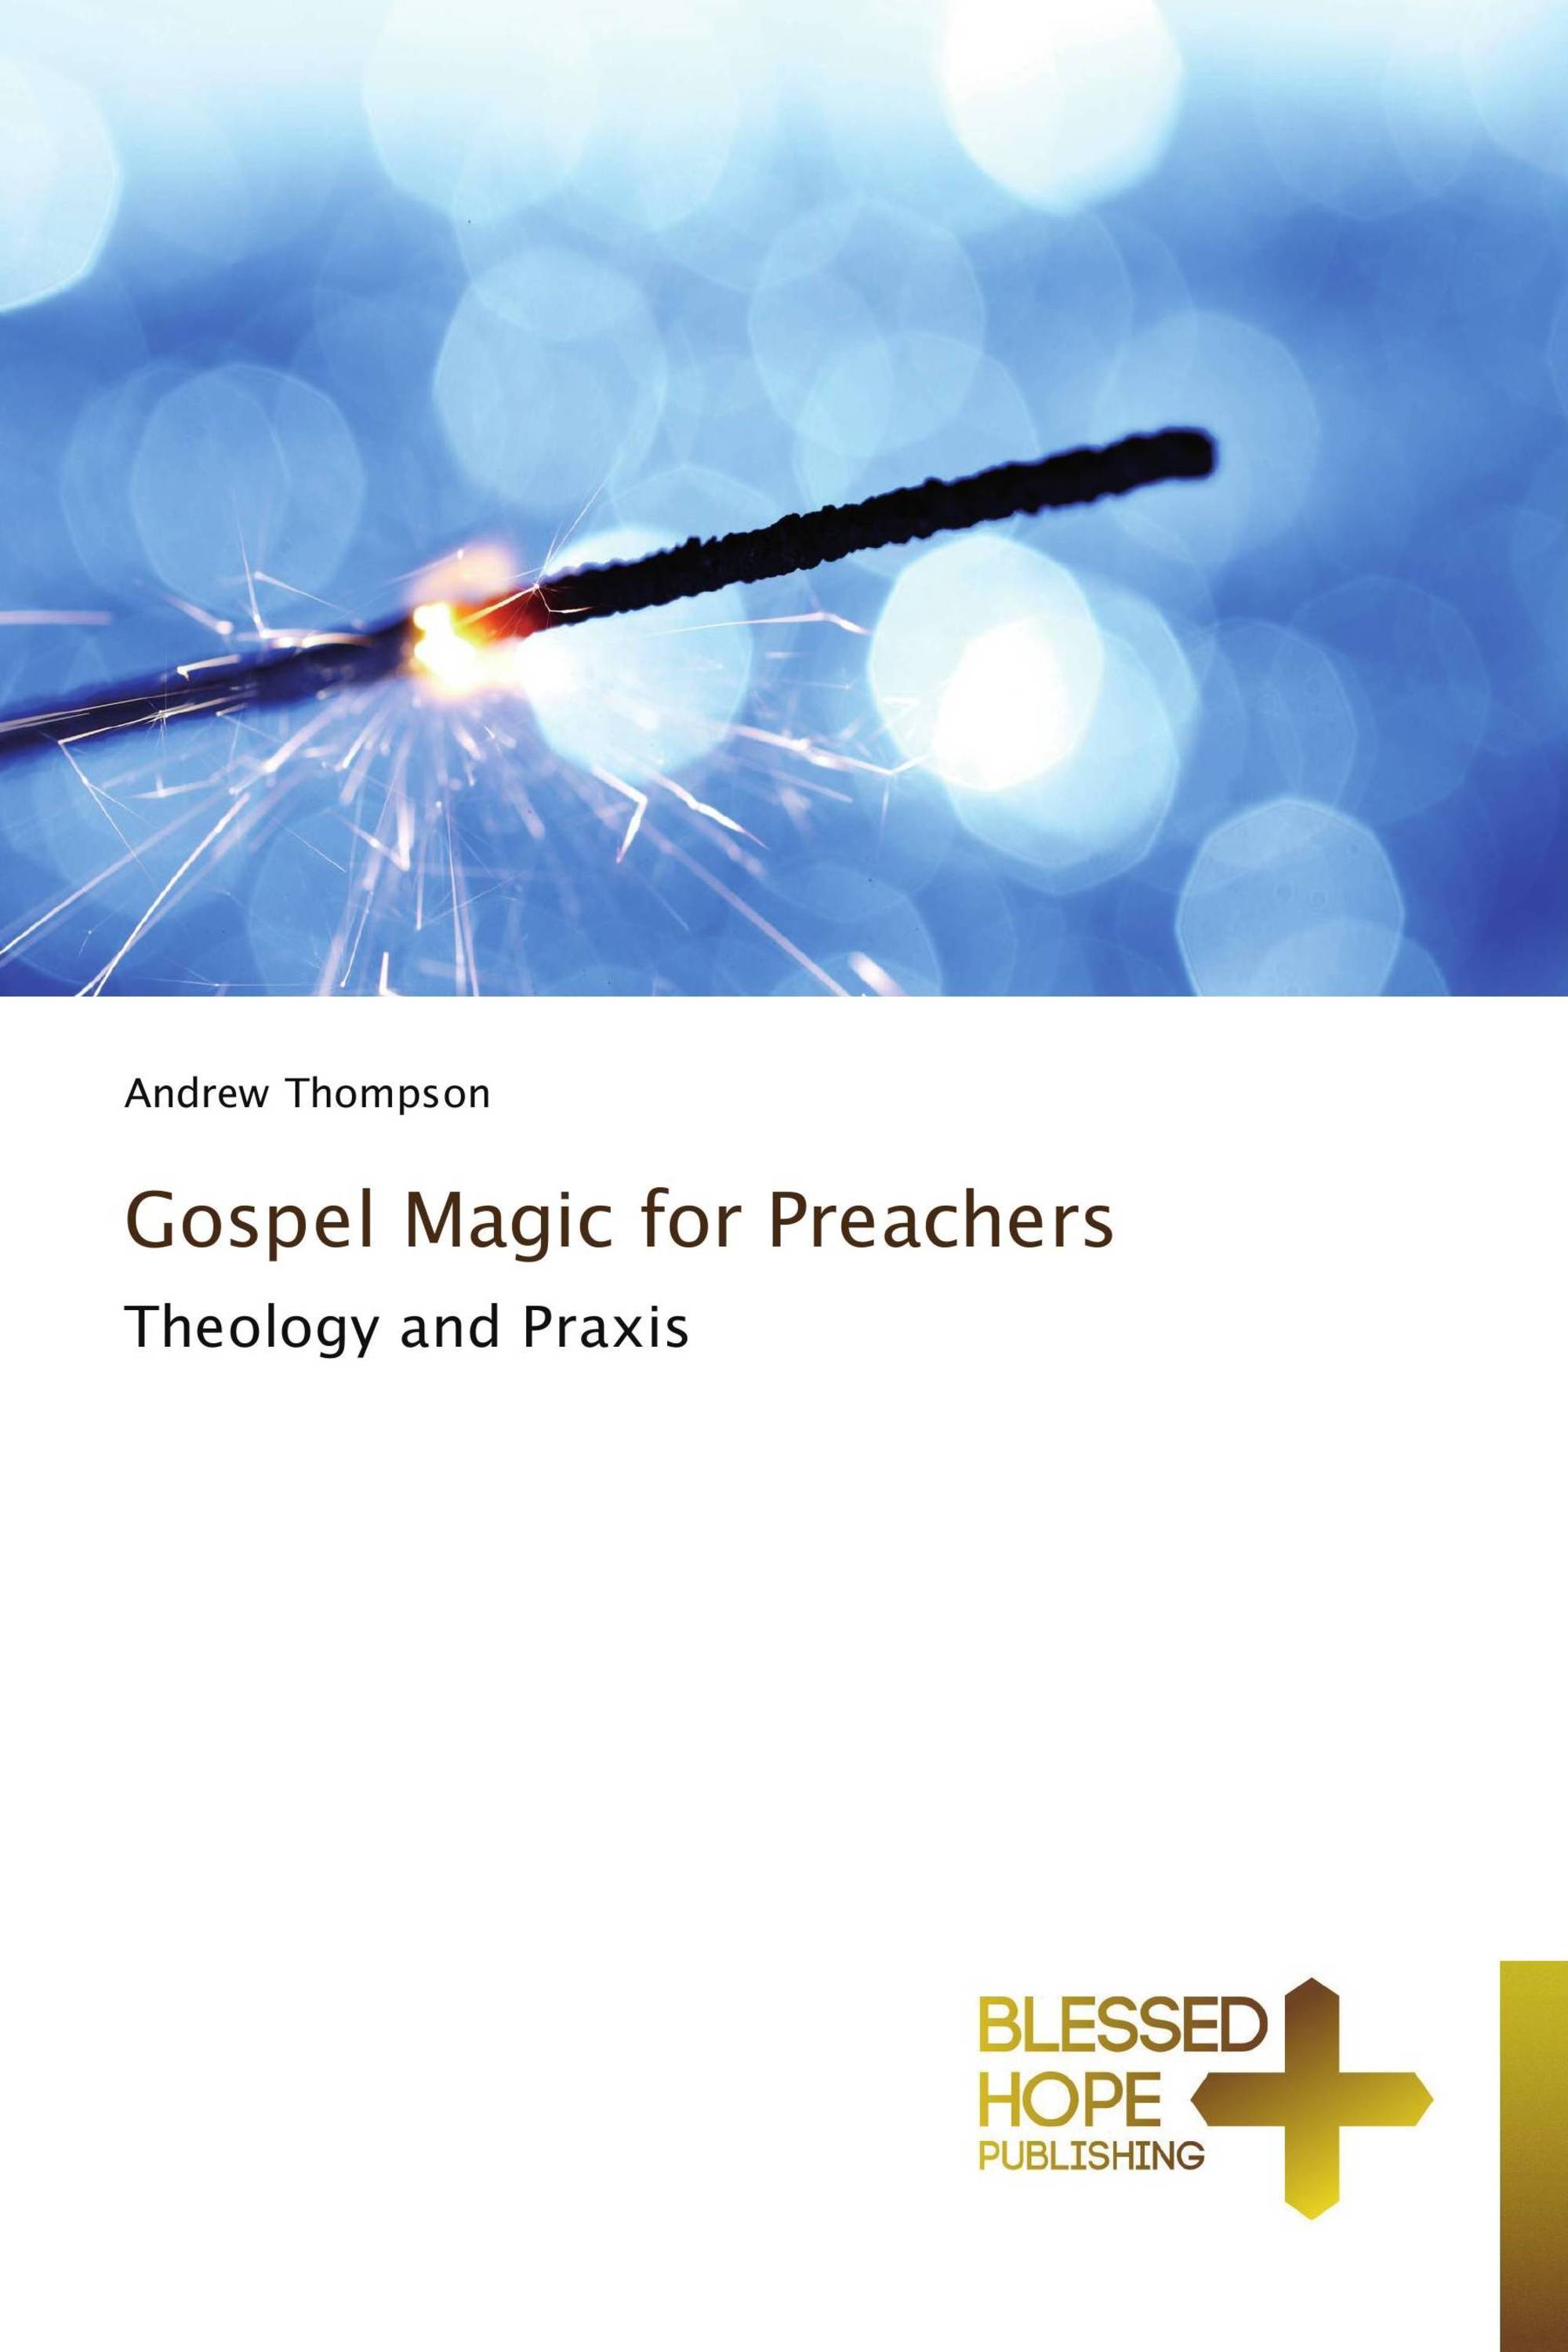 Gospel Magic for Preachers